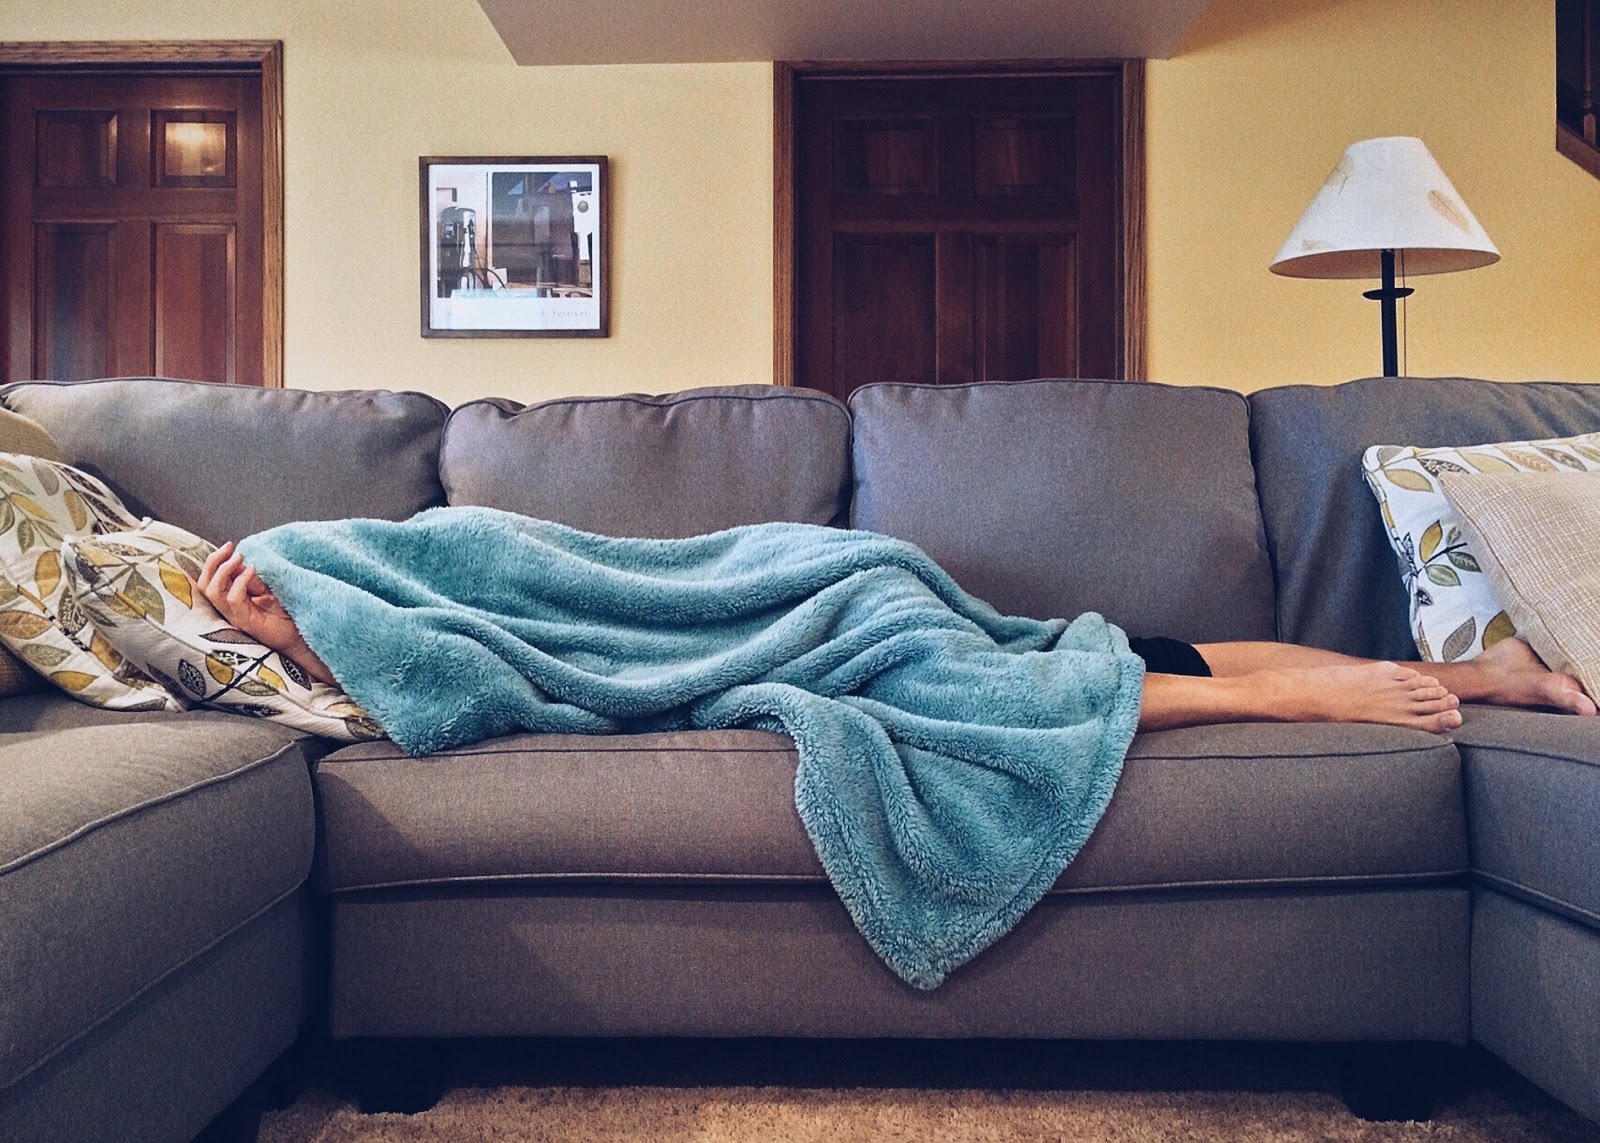 5 Reasons Why You Should Take a Nap